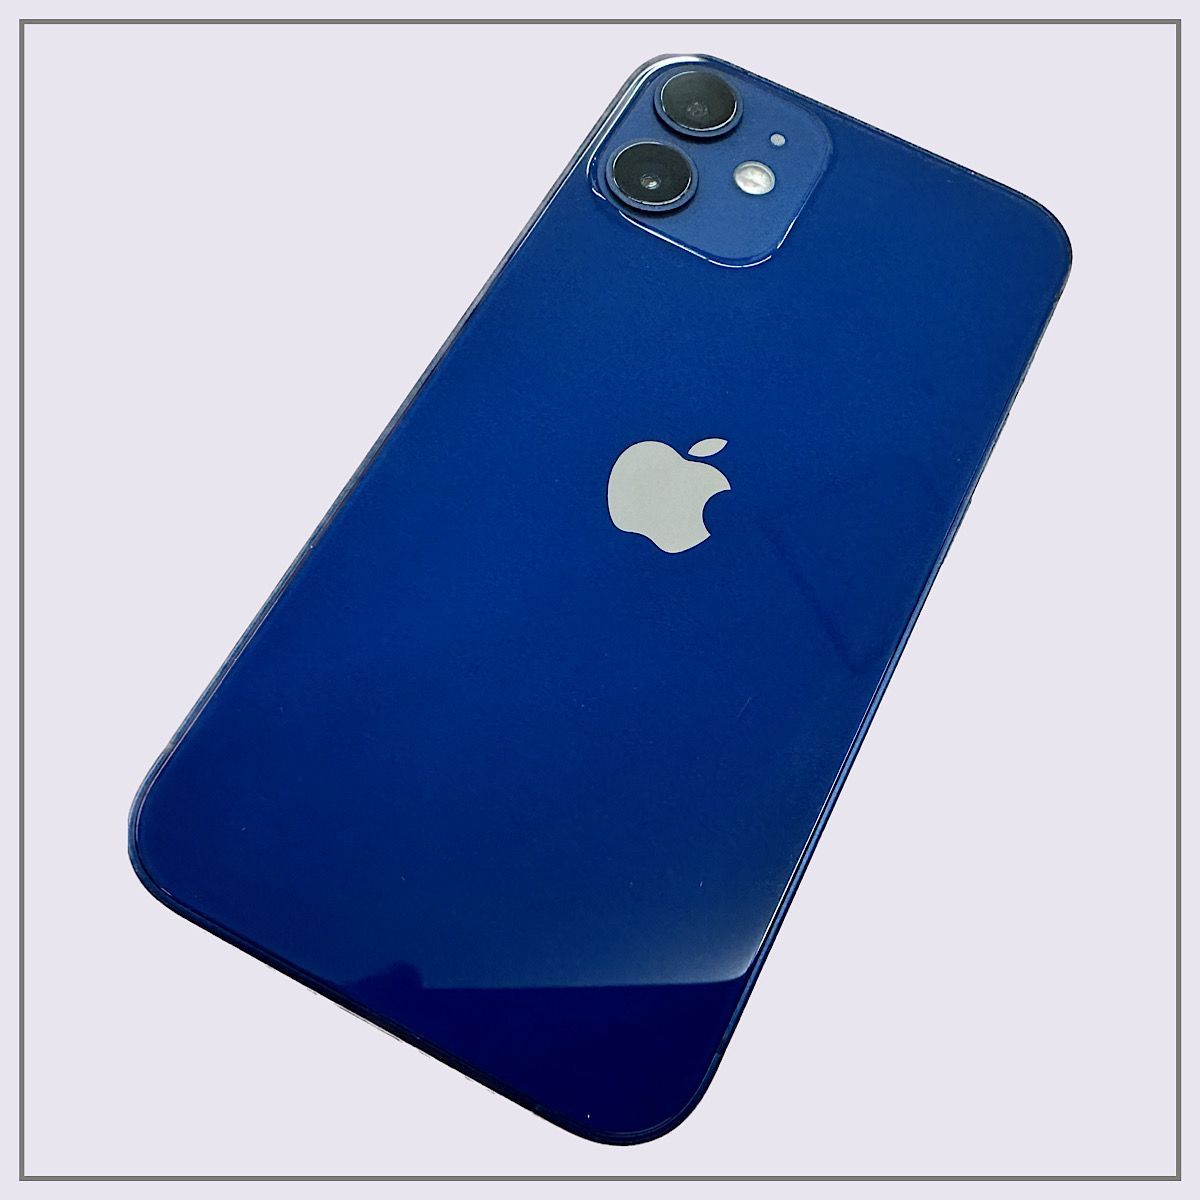 iPhone12mini blueジャンク品 - スマートフォン本体